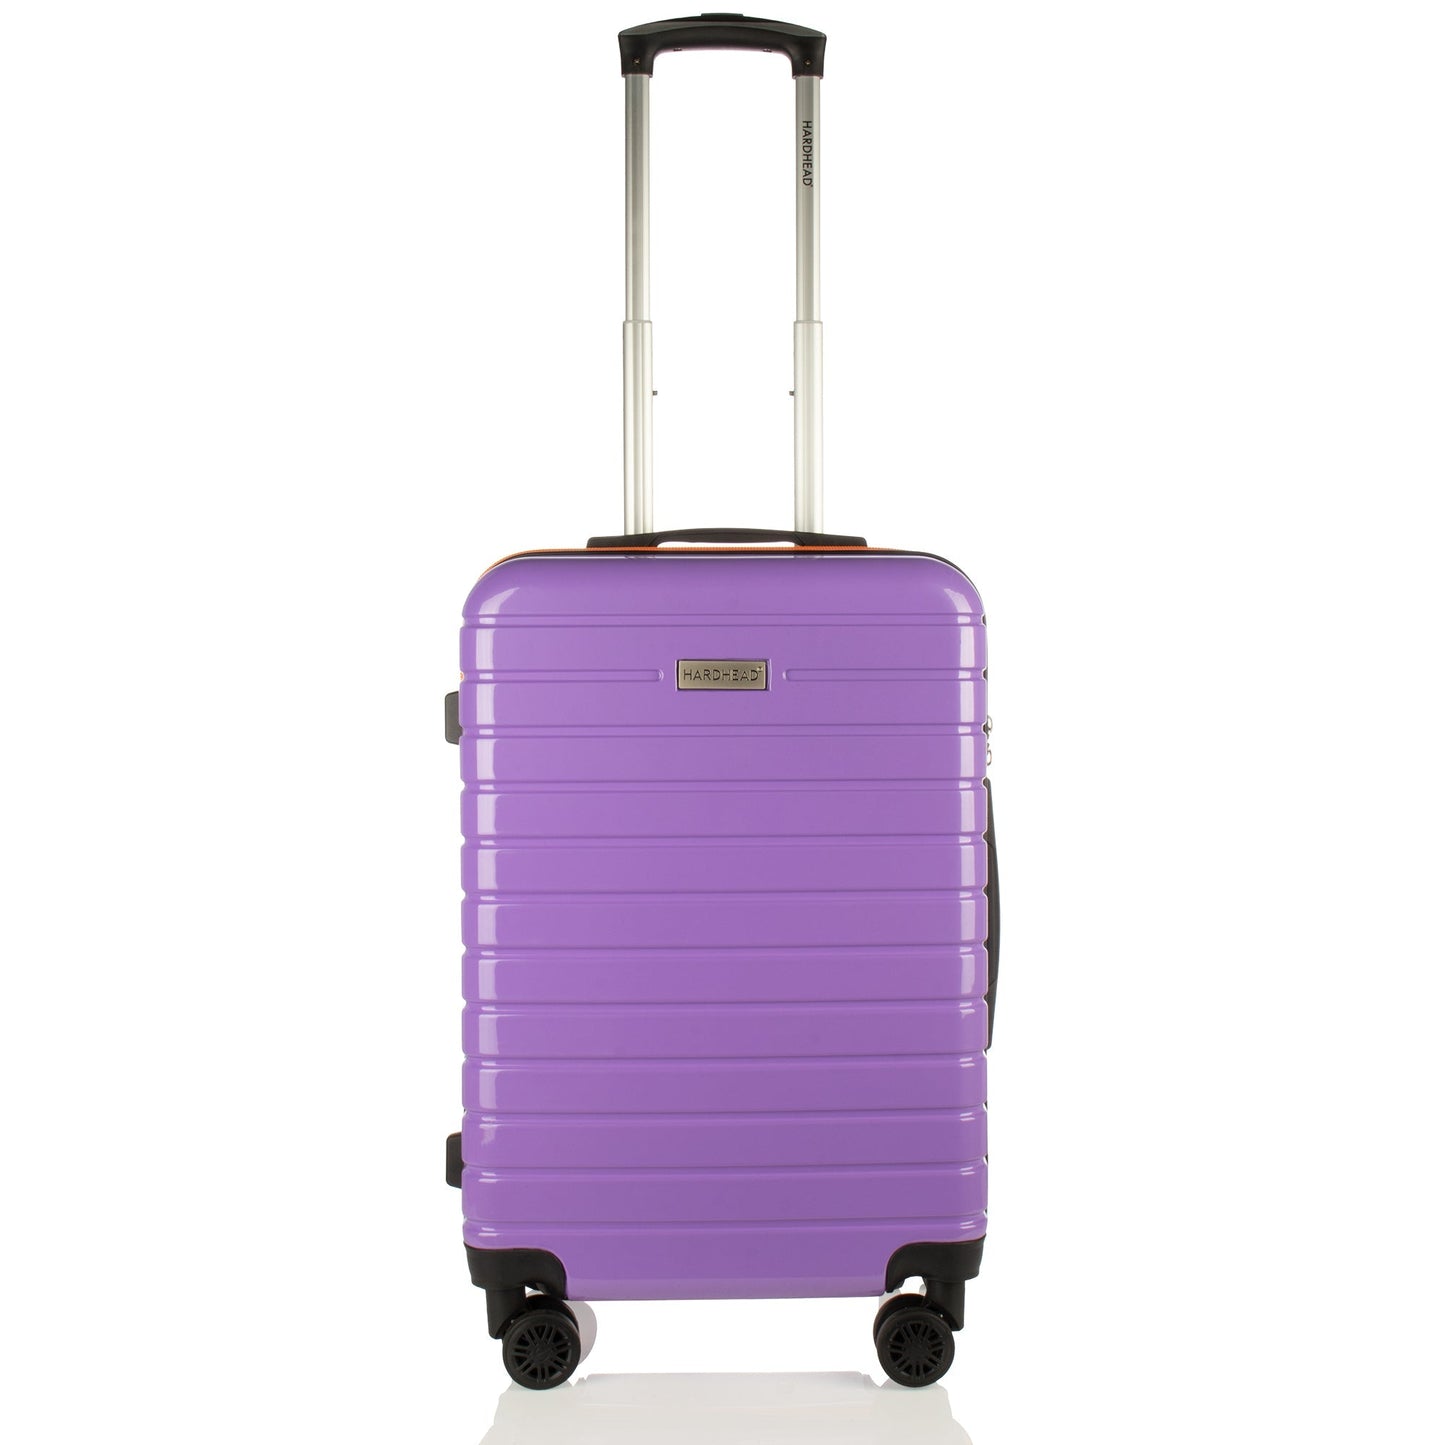 Blaze Collection Purple Luggage 4 Piece Set (18/20/24/28") Suitcase Lock Spinner Hardshell